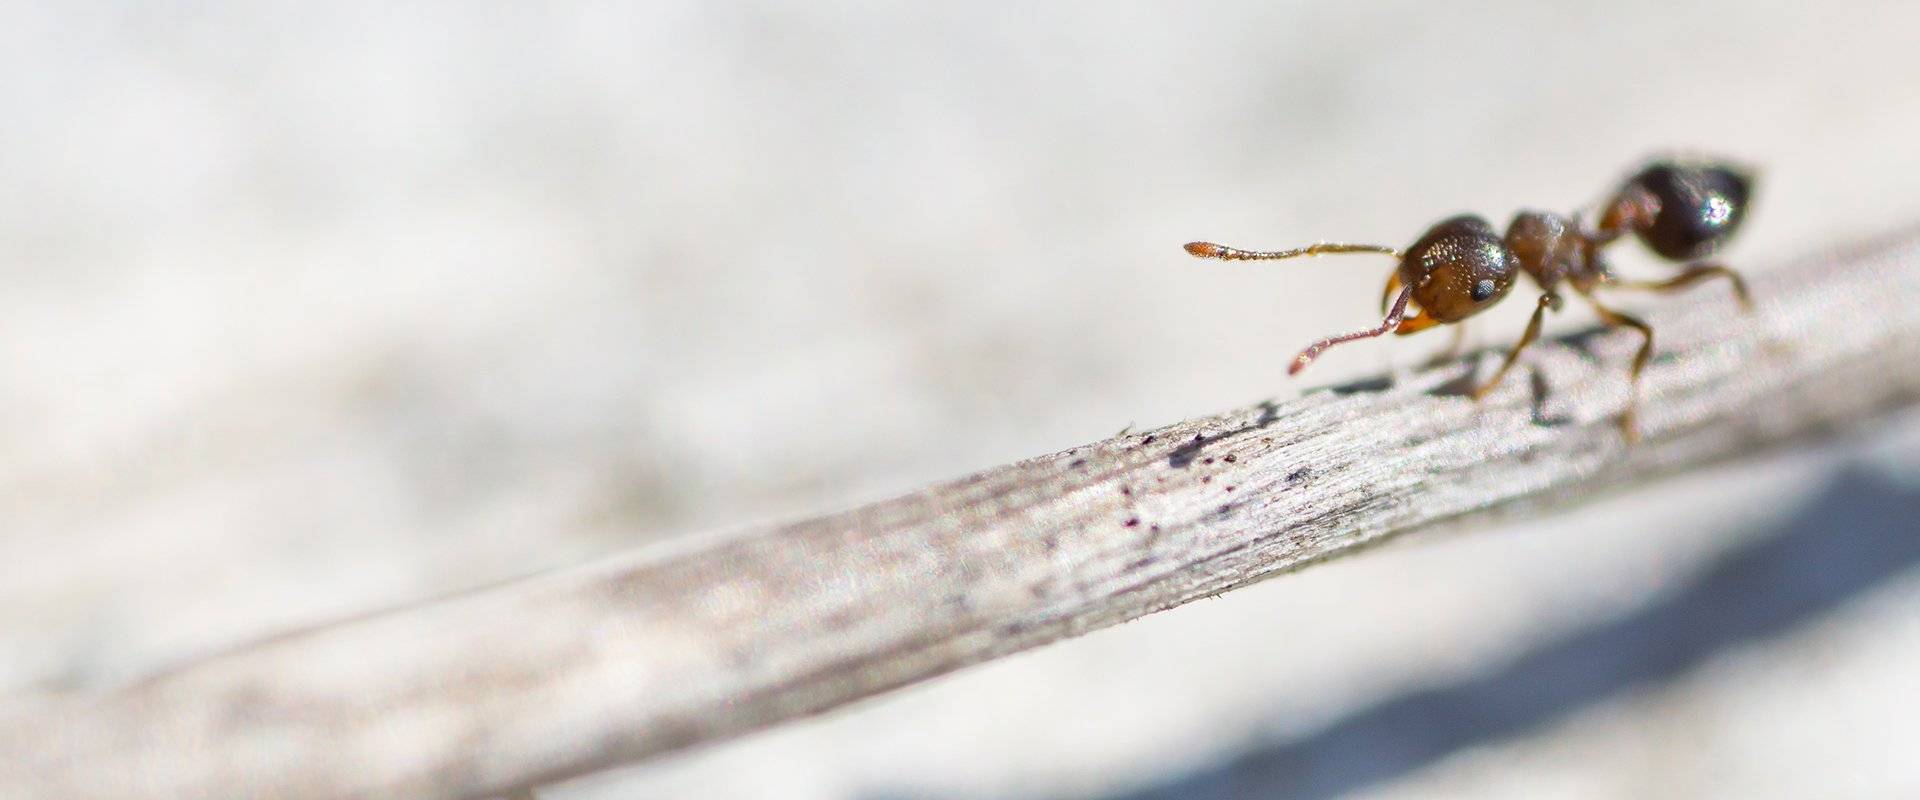 acrobat ant on a stick